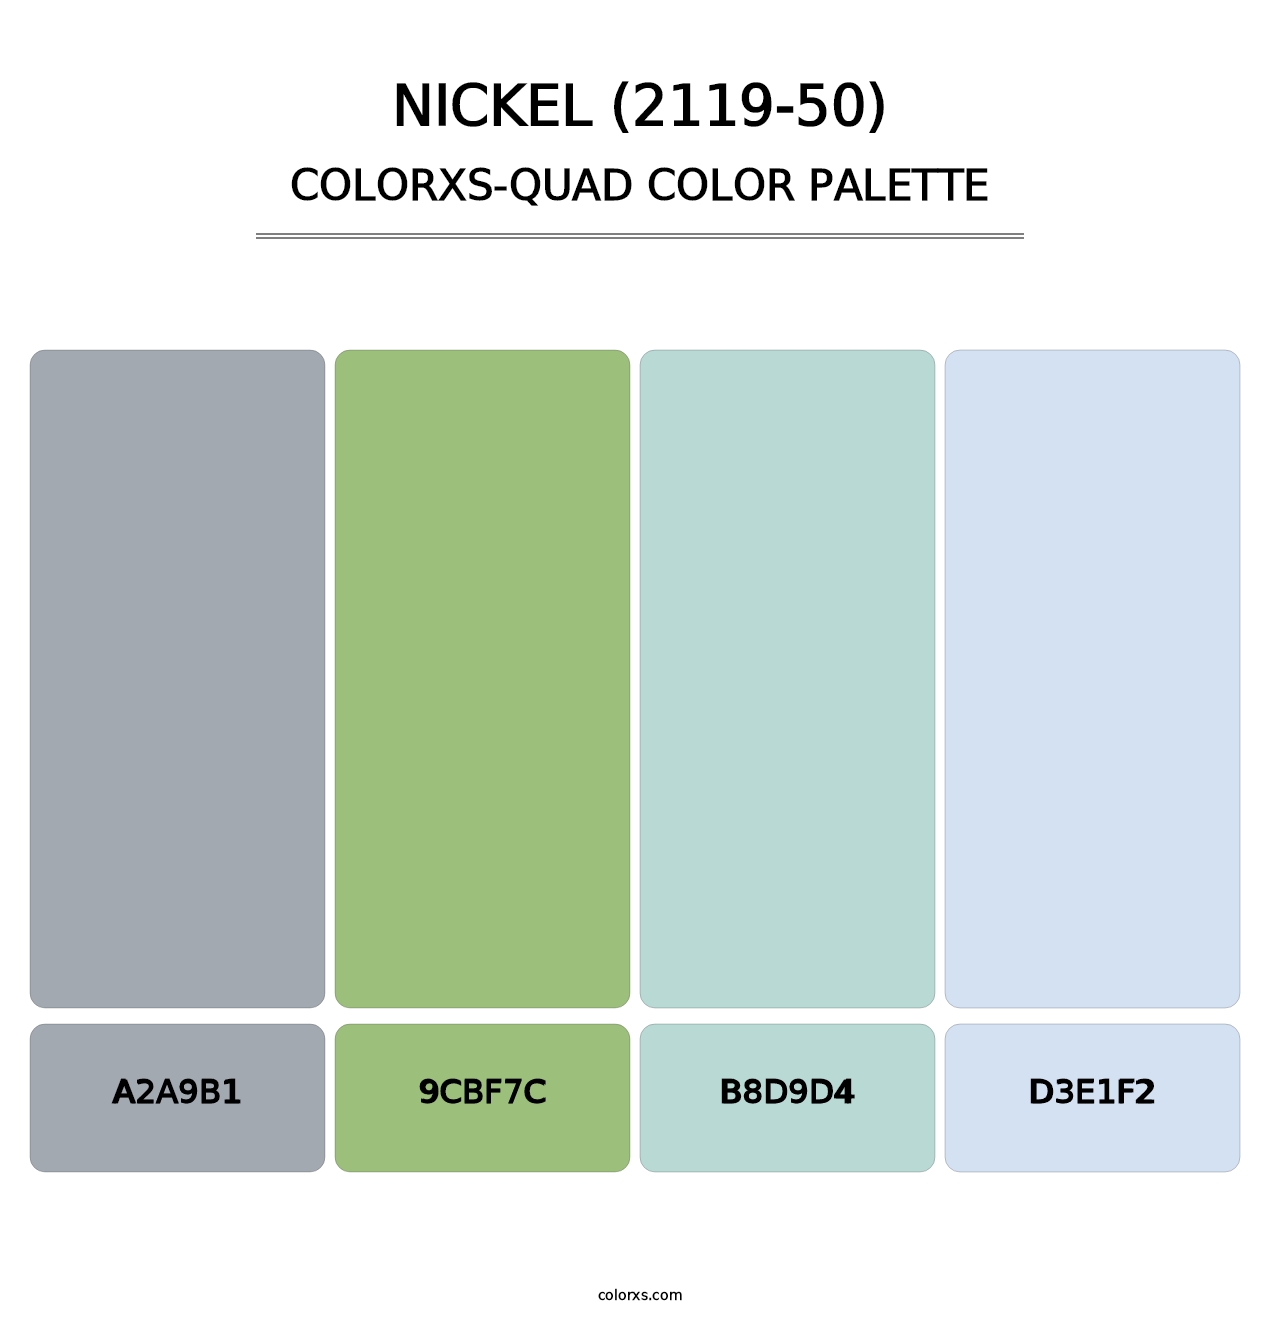 Nickel (2119-50) - Colorxs Quad Palette